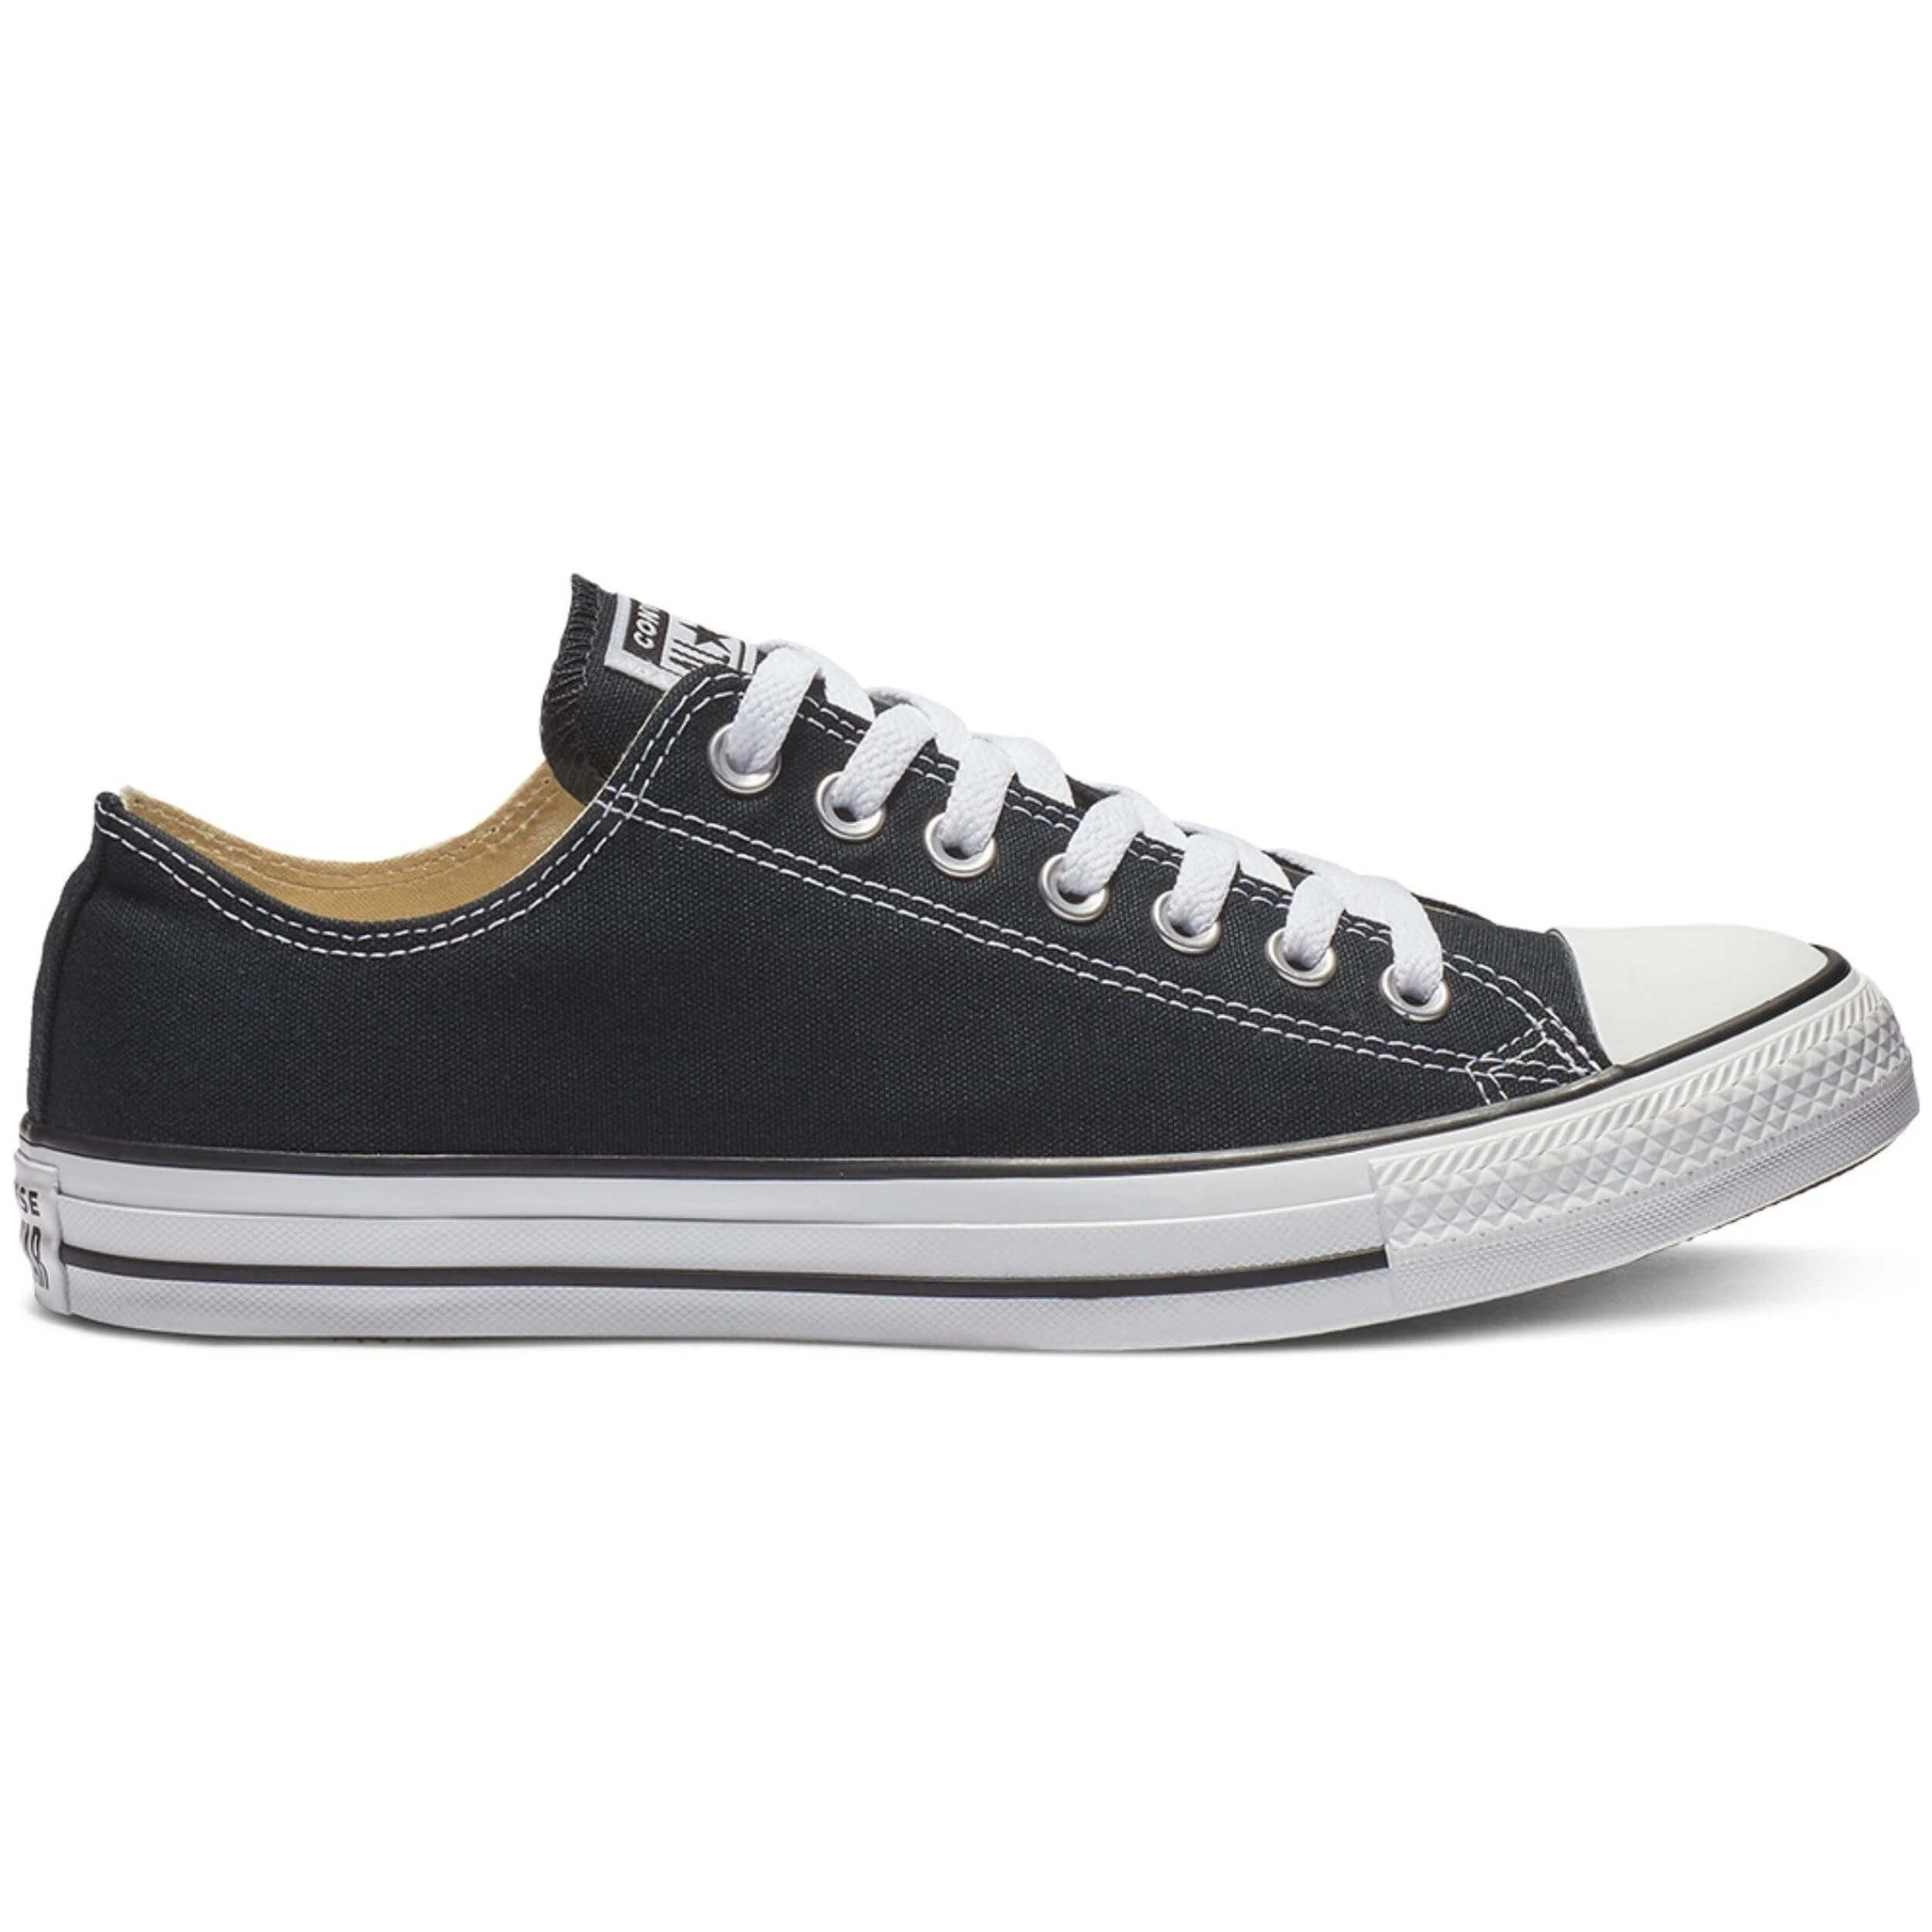 Converse - Calzado Sportswear marca Converse modelo M9166C para unisex en color negro